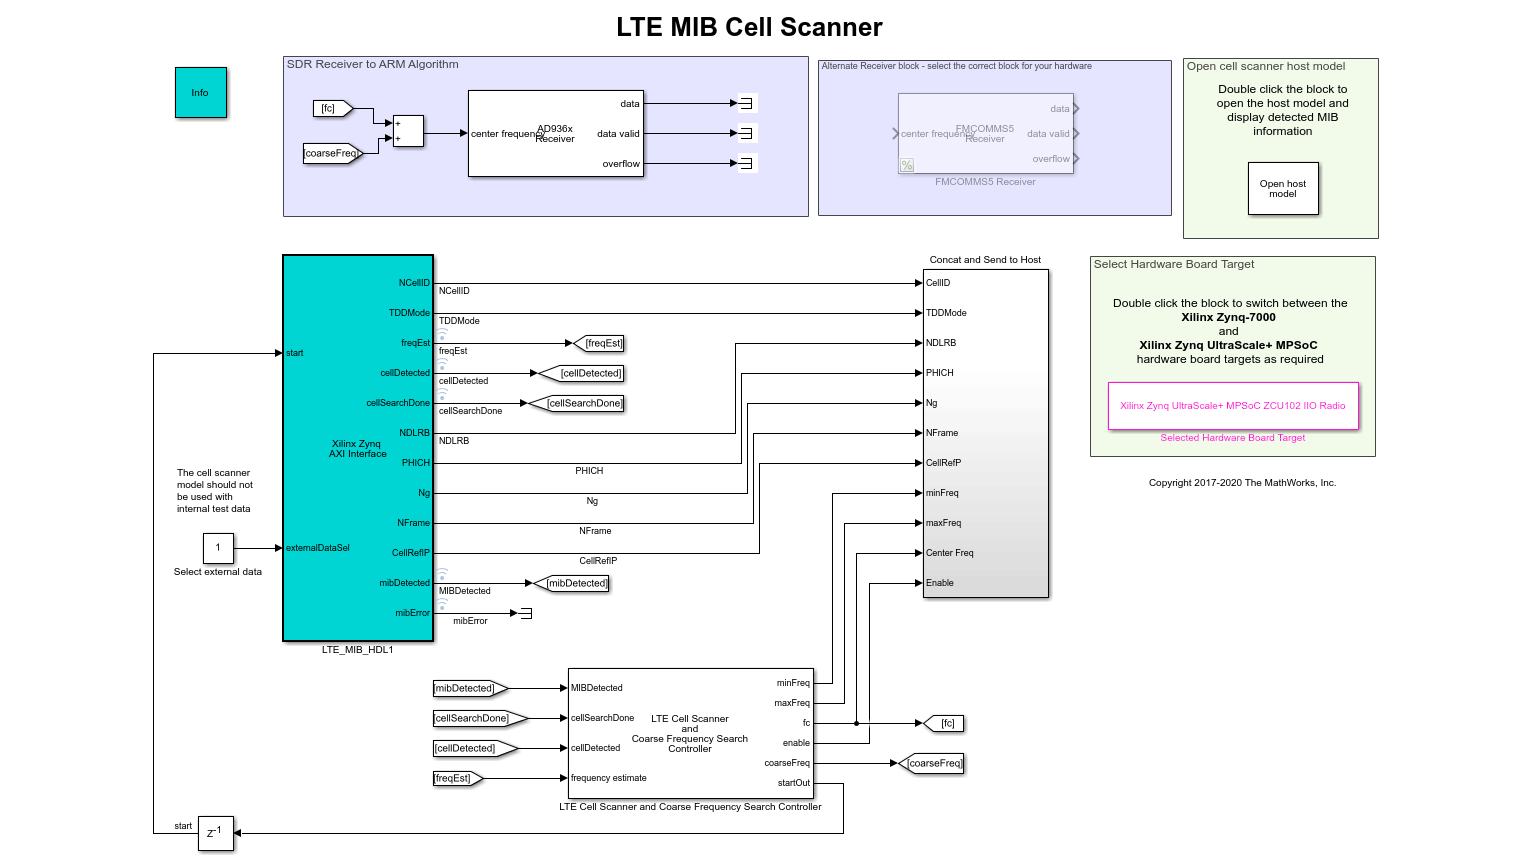 Simulink block depicting hardware-ready cell scanning algorithms.